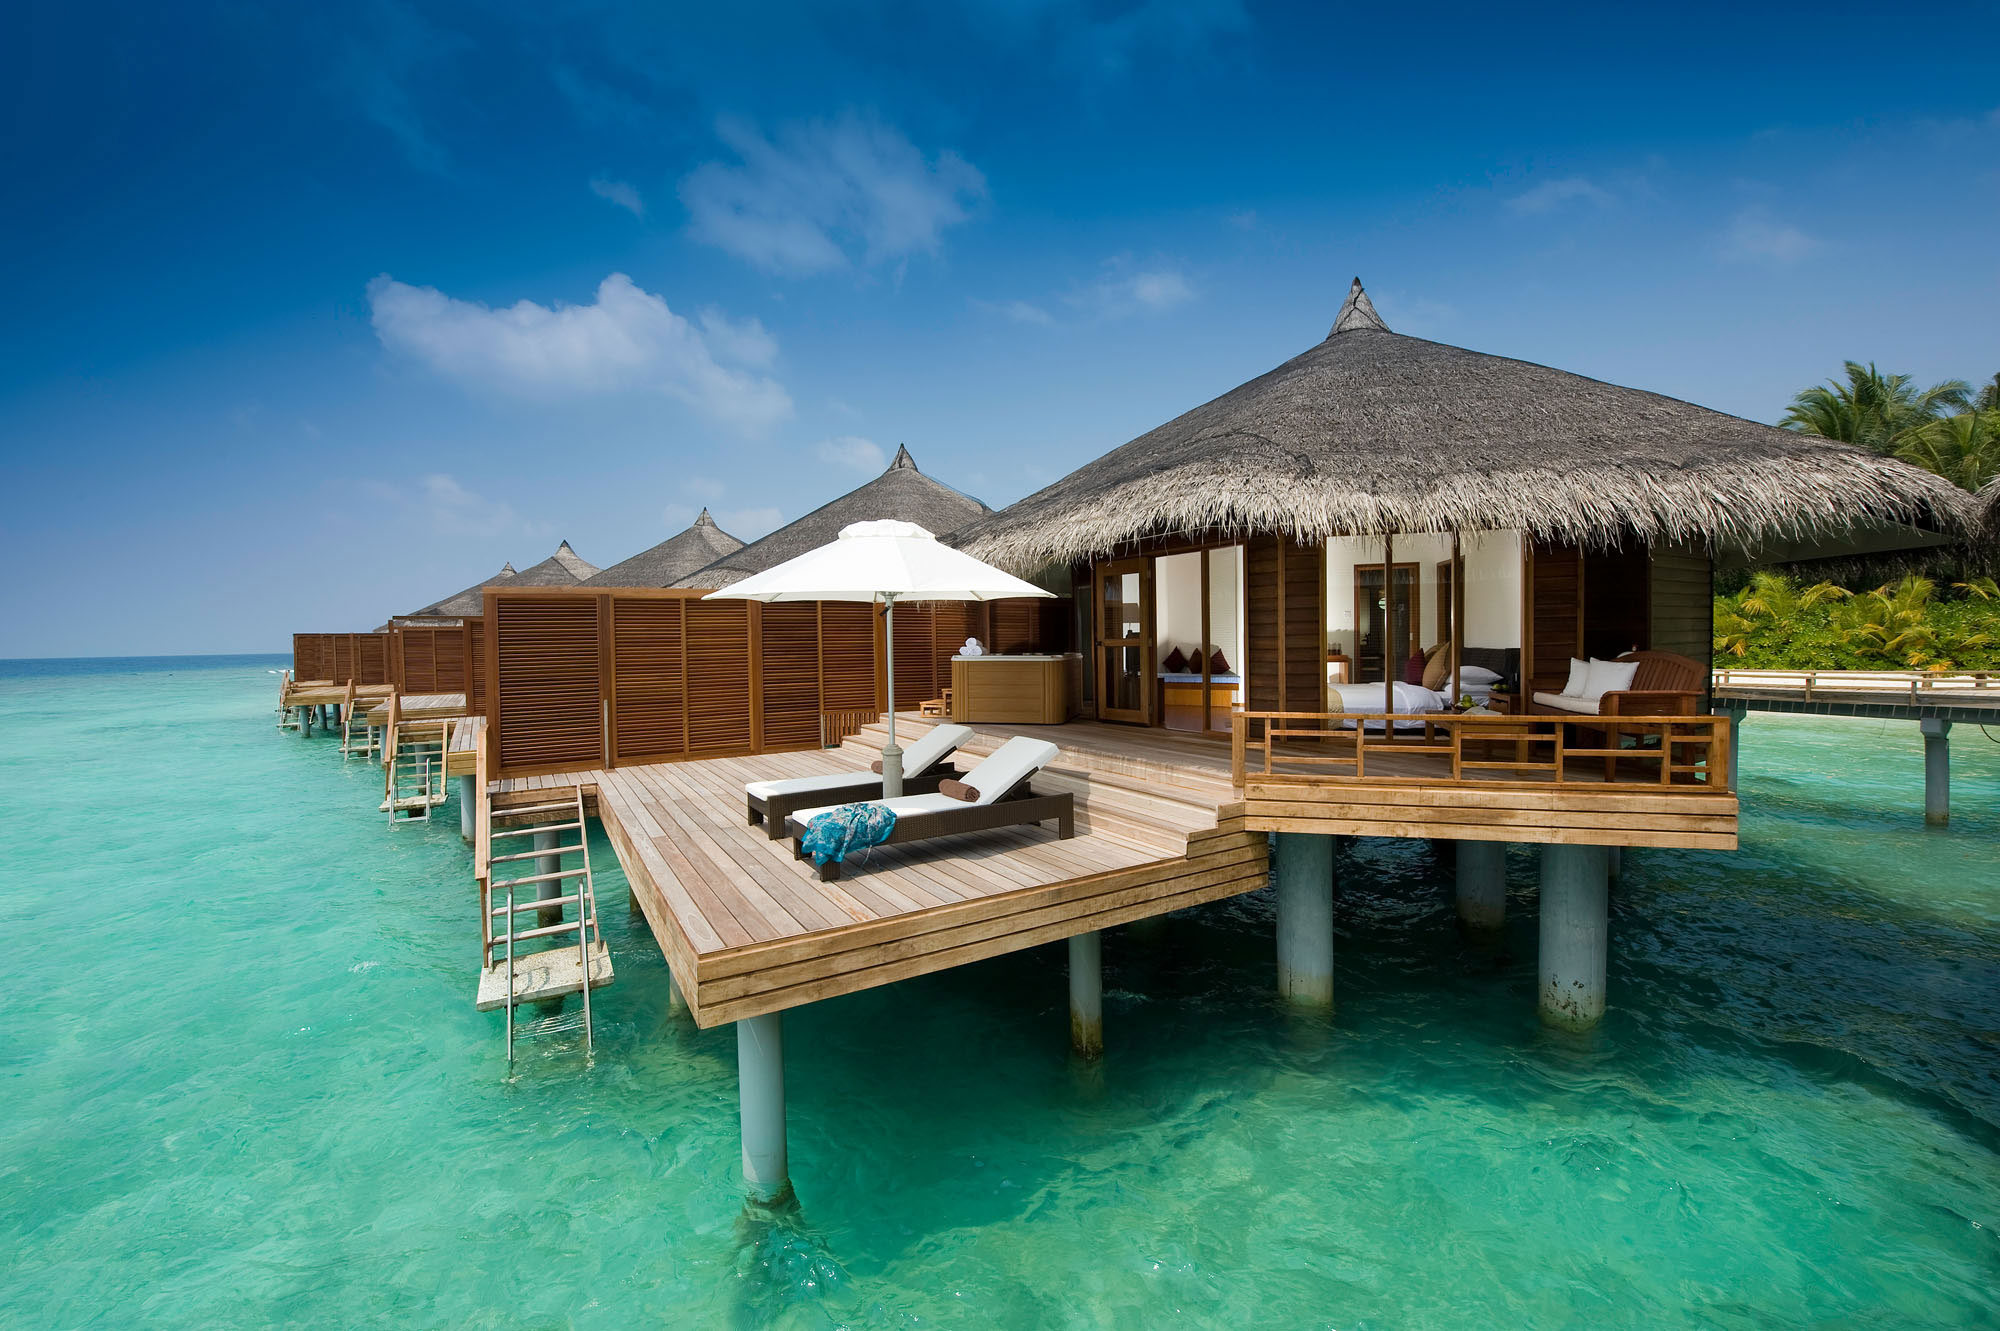 Island вода. Мальдивы Курамати Исланд. Остров Канухура Мальдивы. Kuramathi Island Resort 4 Мальдивы. Отель на Мальдивах Kuramathi Maldives.